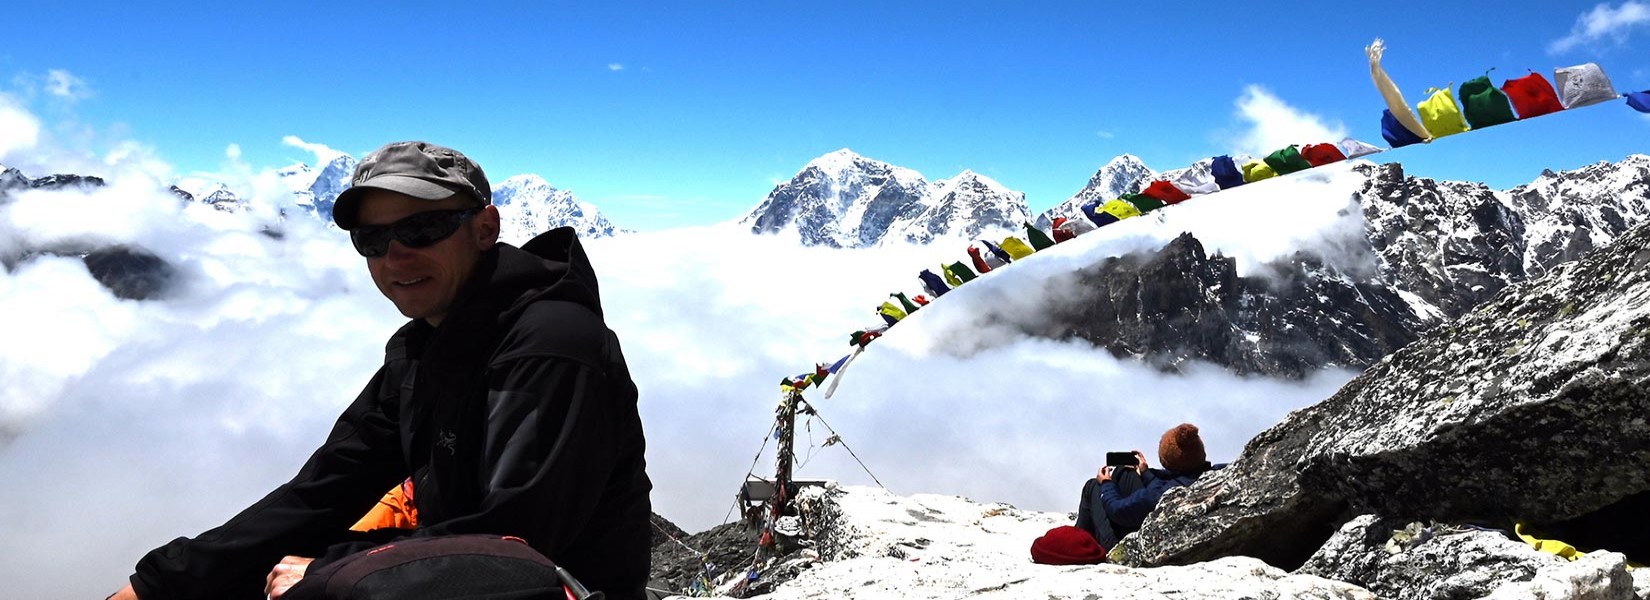 Everest Base Camp Trek with Island Peak in March